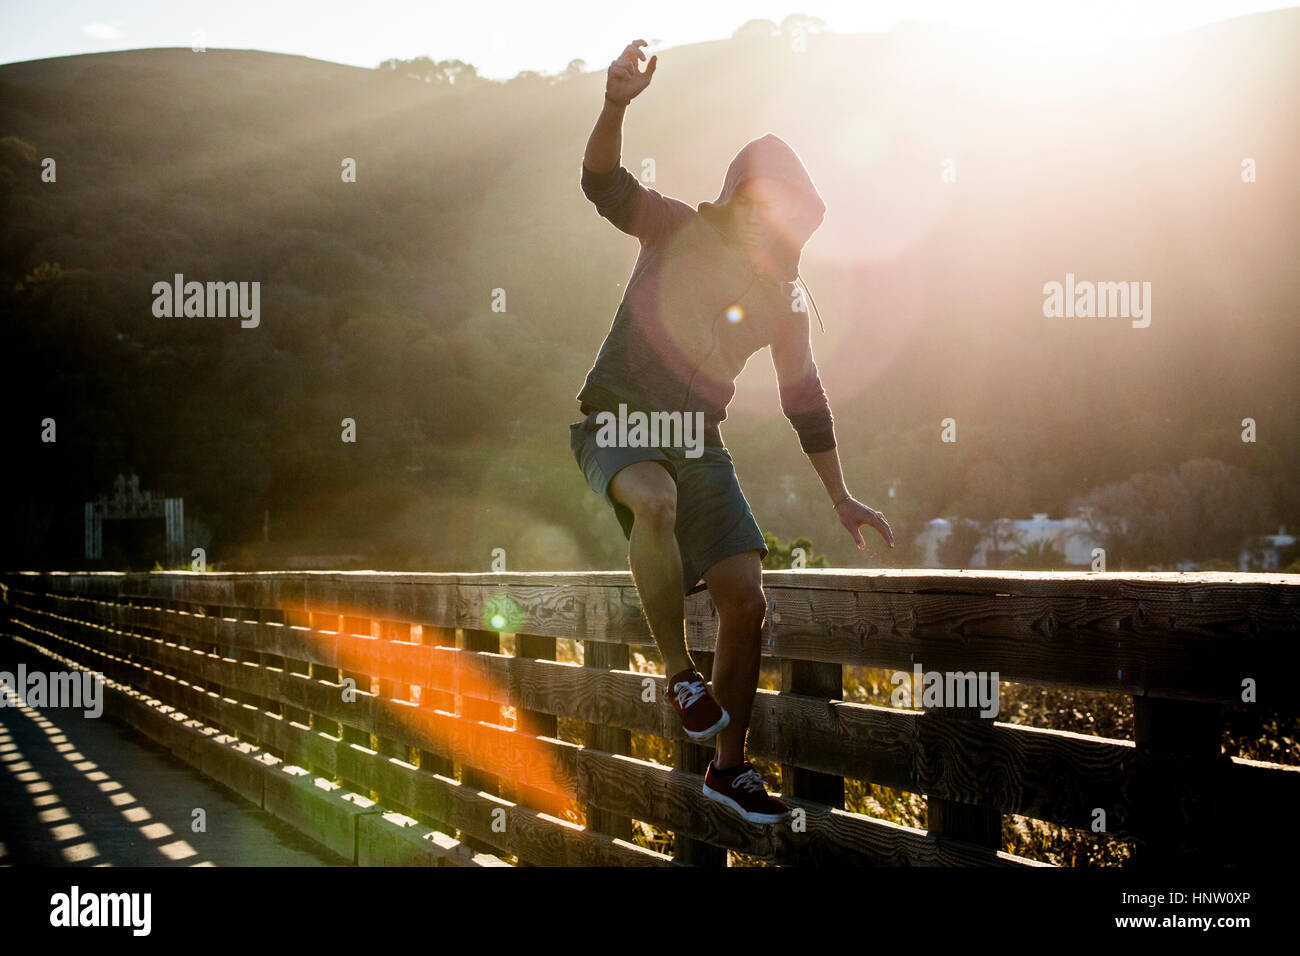 Mixed Race man jumping near railing on footbridge Stock Photo